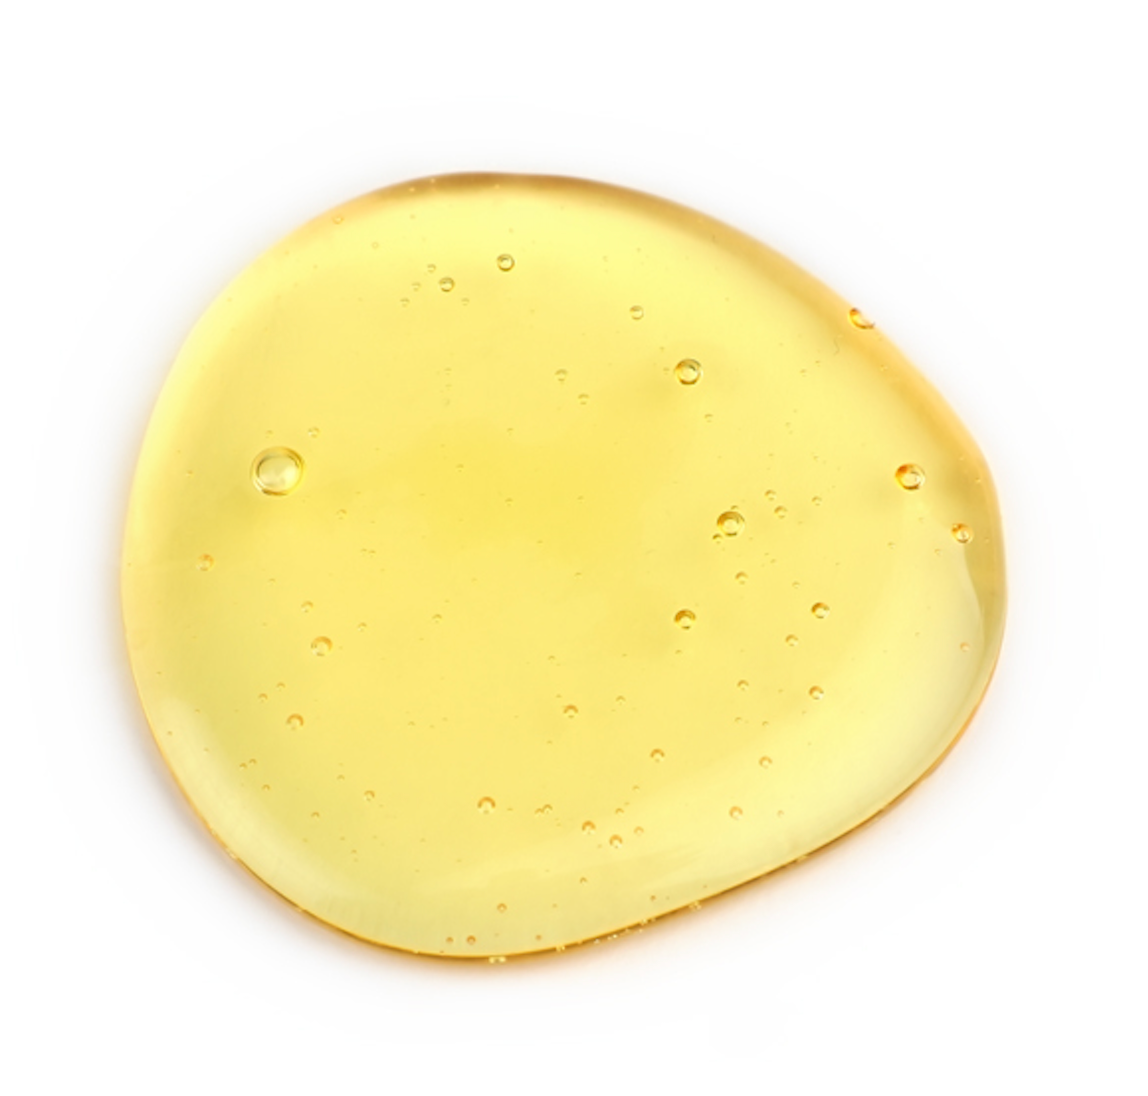 Semi-solid glob of viscous hemp cannabinoid distillate oil, with a light amber hue.